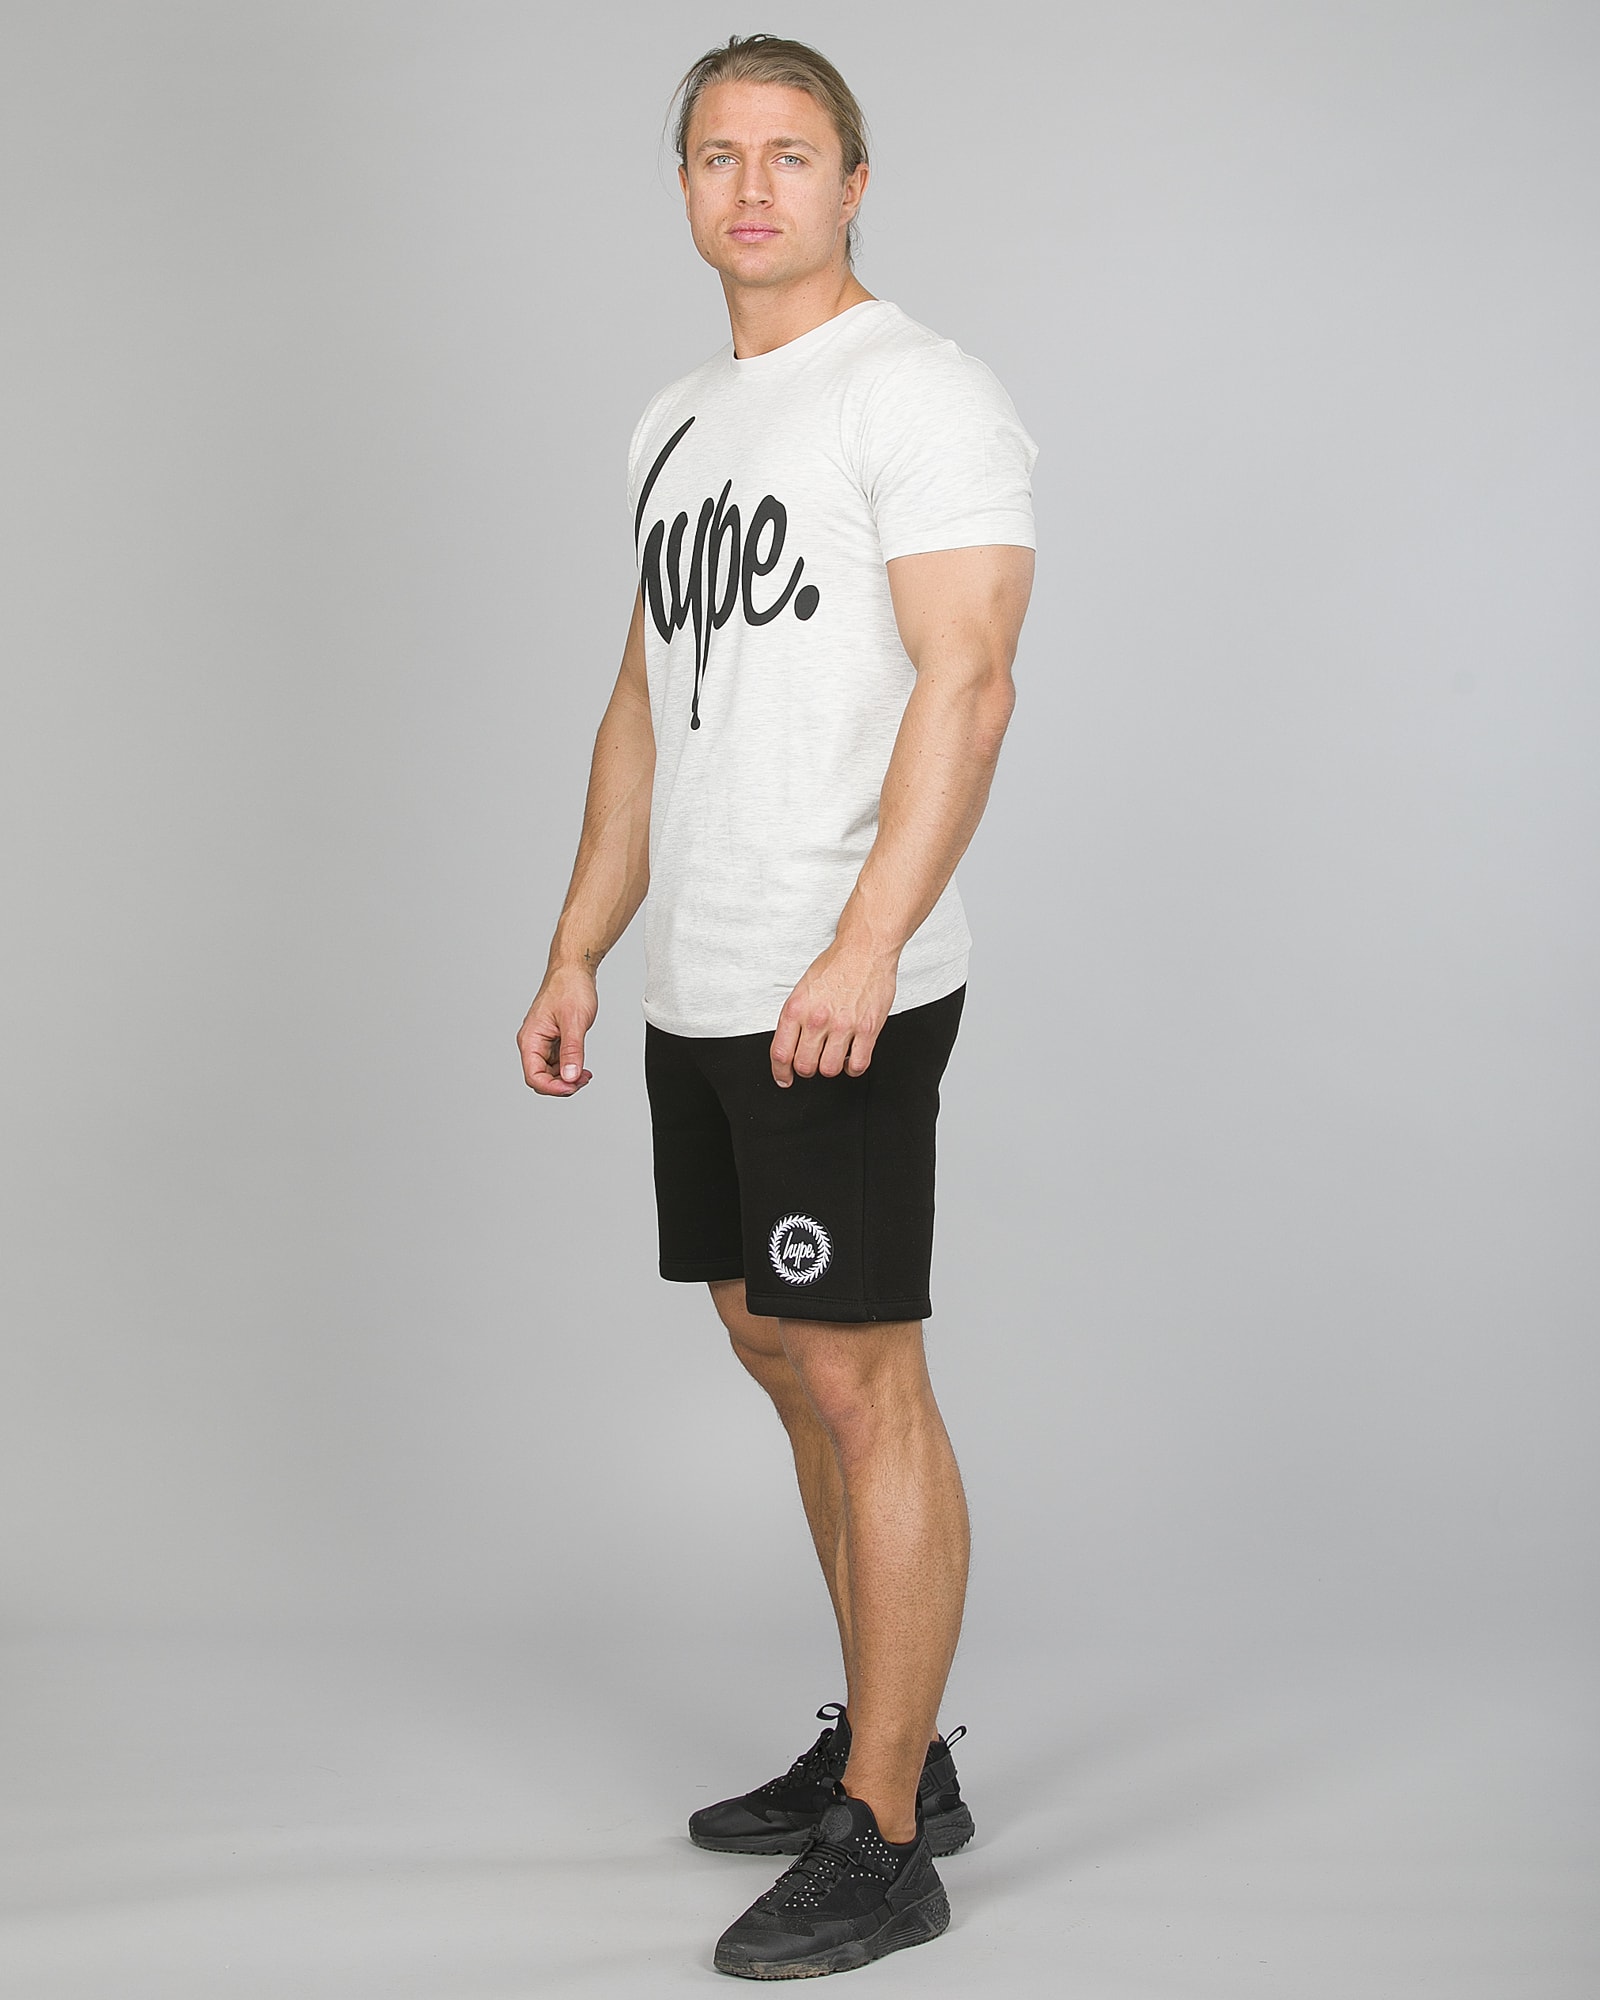 Hype Script T-Shirt Men ss18005 Charcoal and Crest Shorts ss18336b Black b